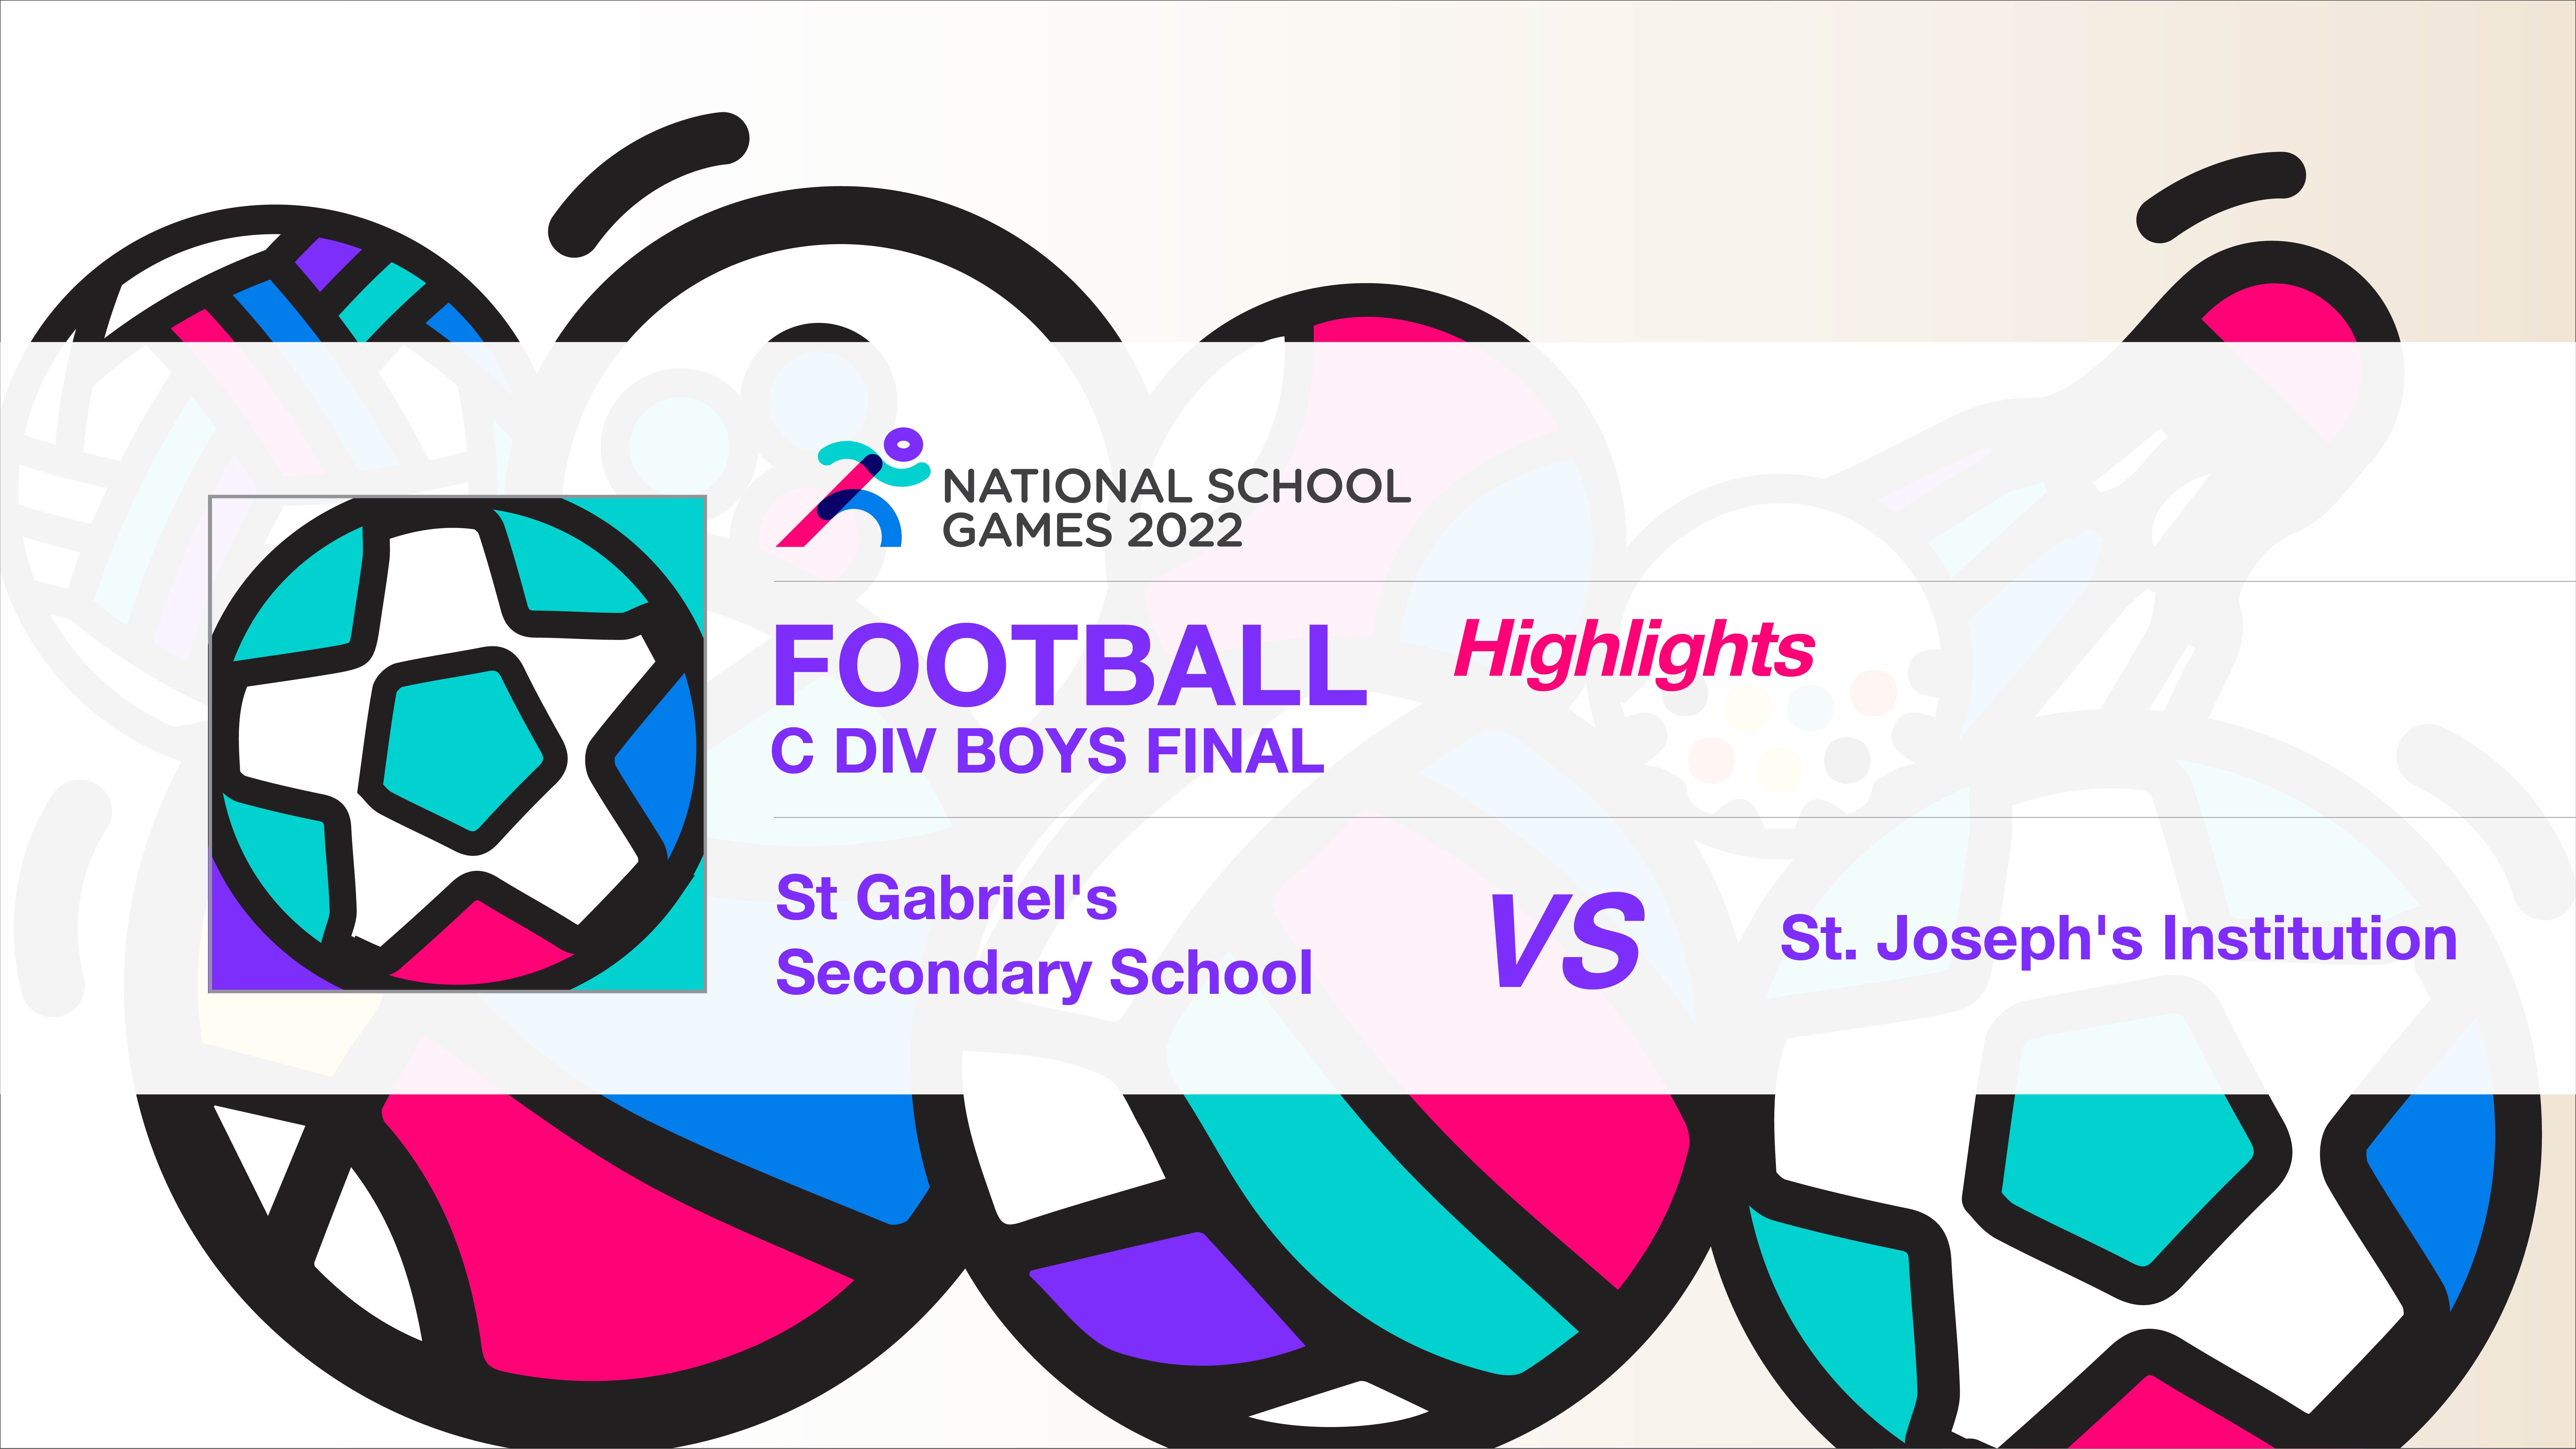 SSSC Football South Zone C Division Boys Final | St Gabriel's Secondary School vs St. Josephs's Institution - Highlights